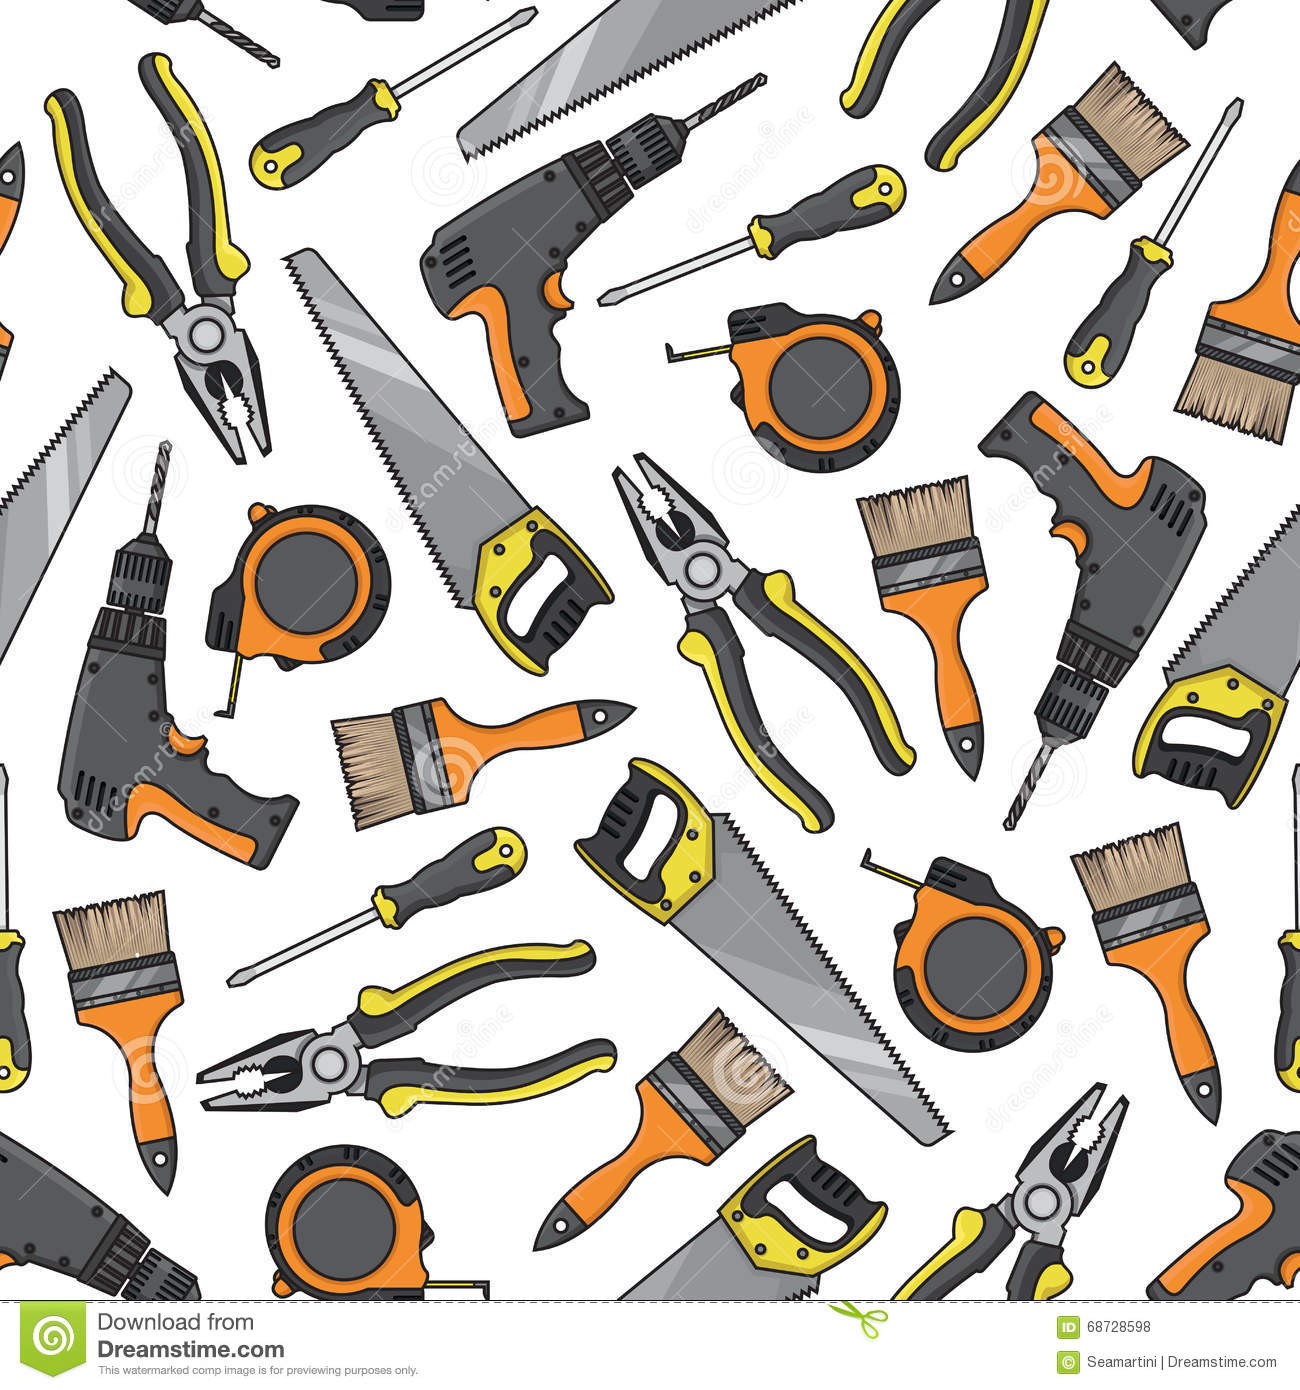 iti tools and equipment